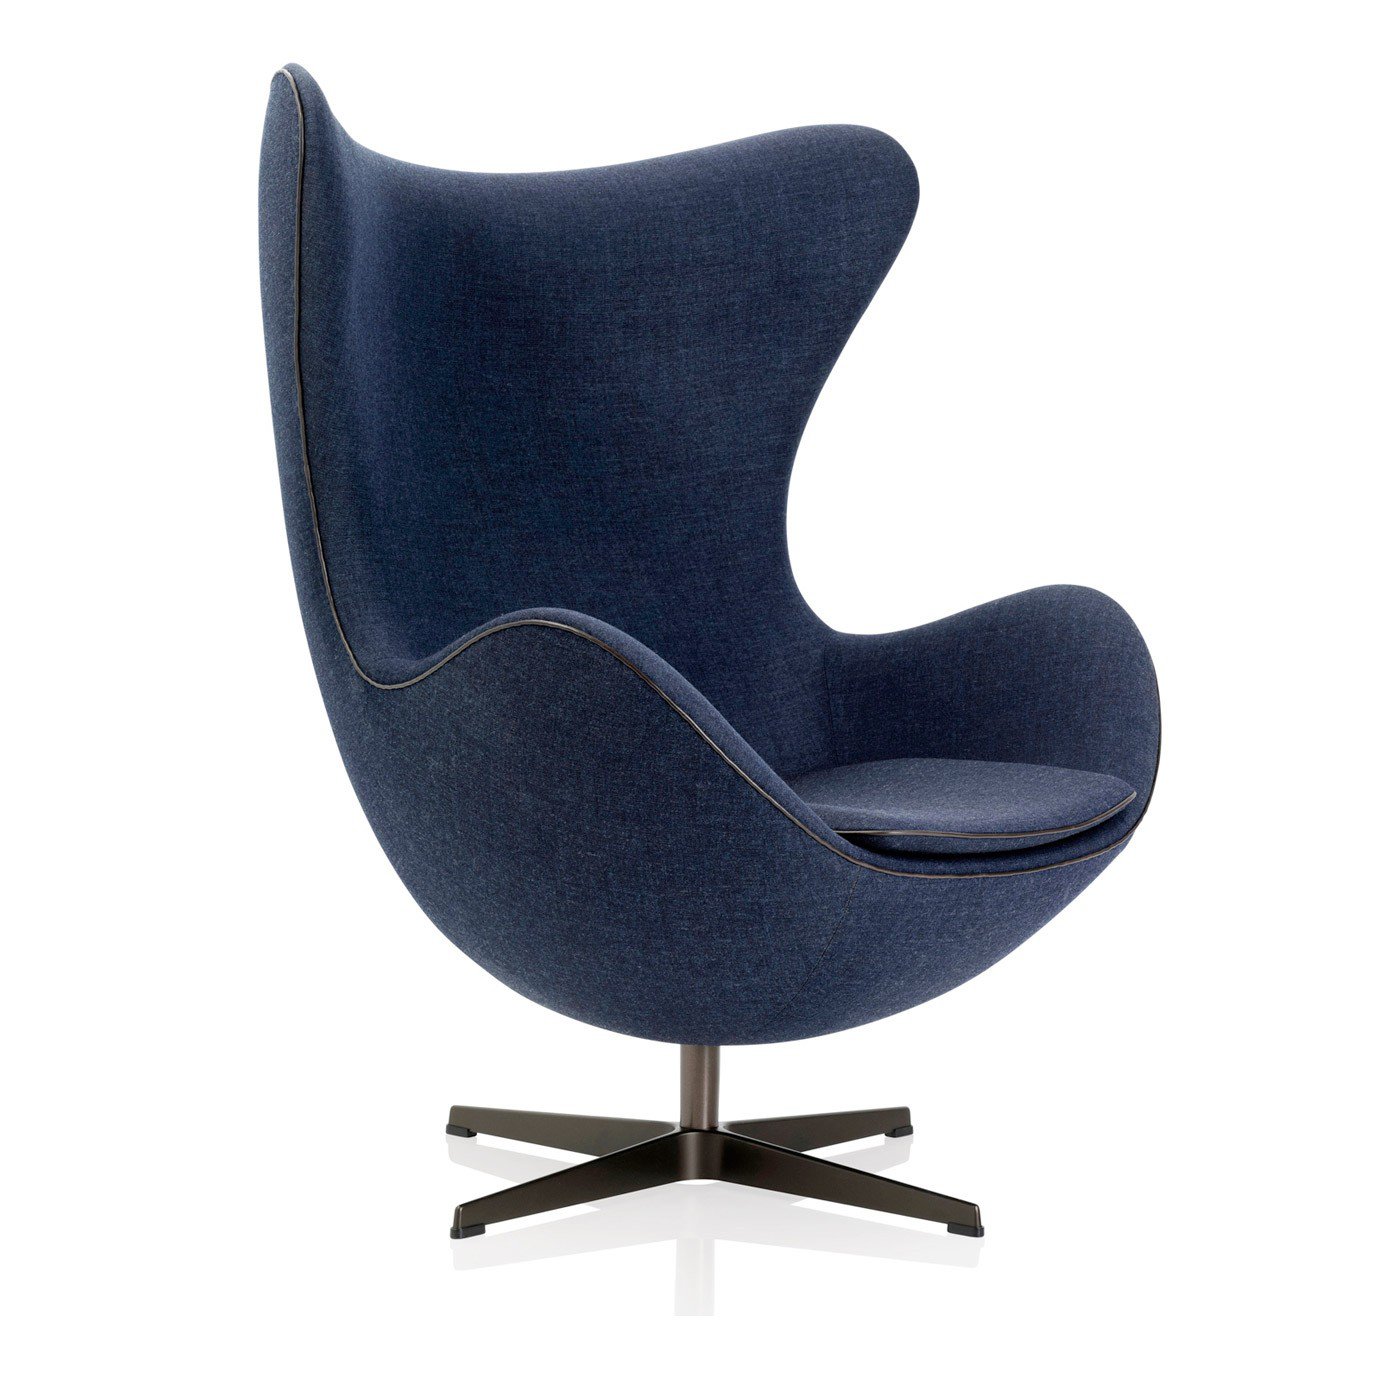 Original Arne Jacobson Egg Chair reproduction furniture